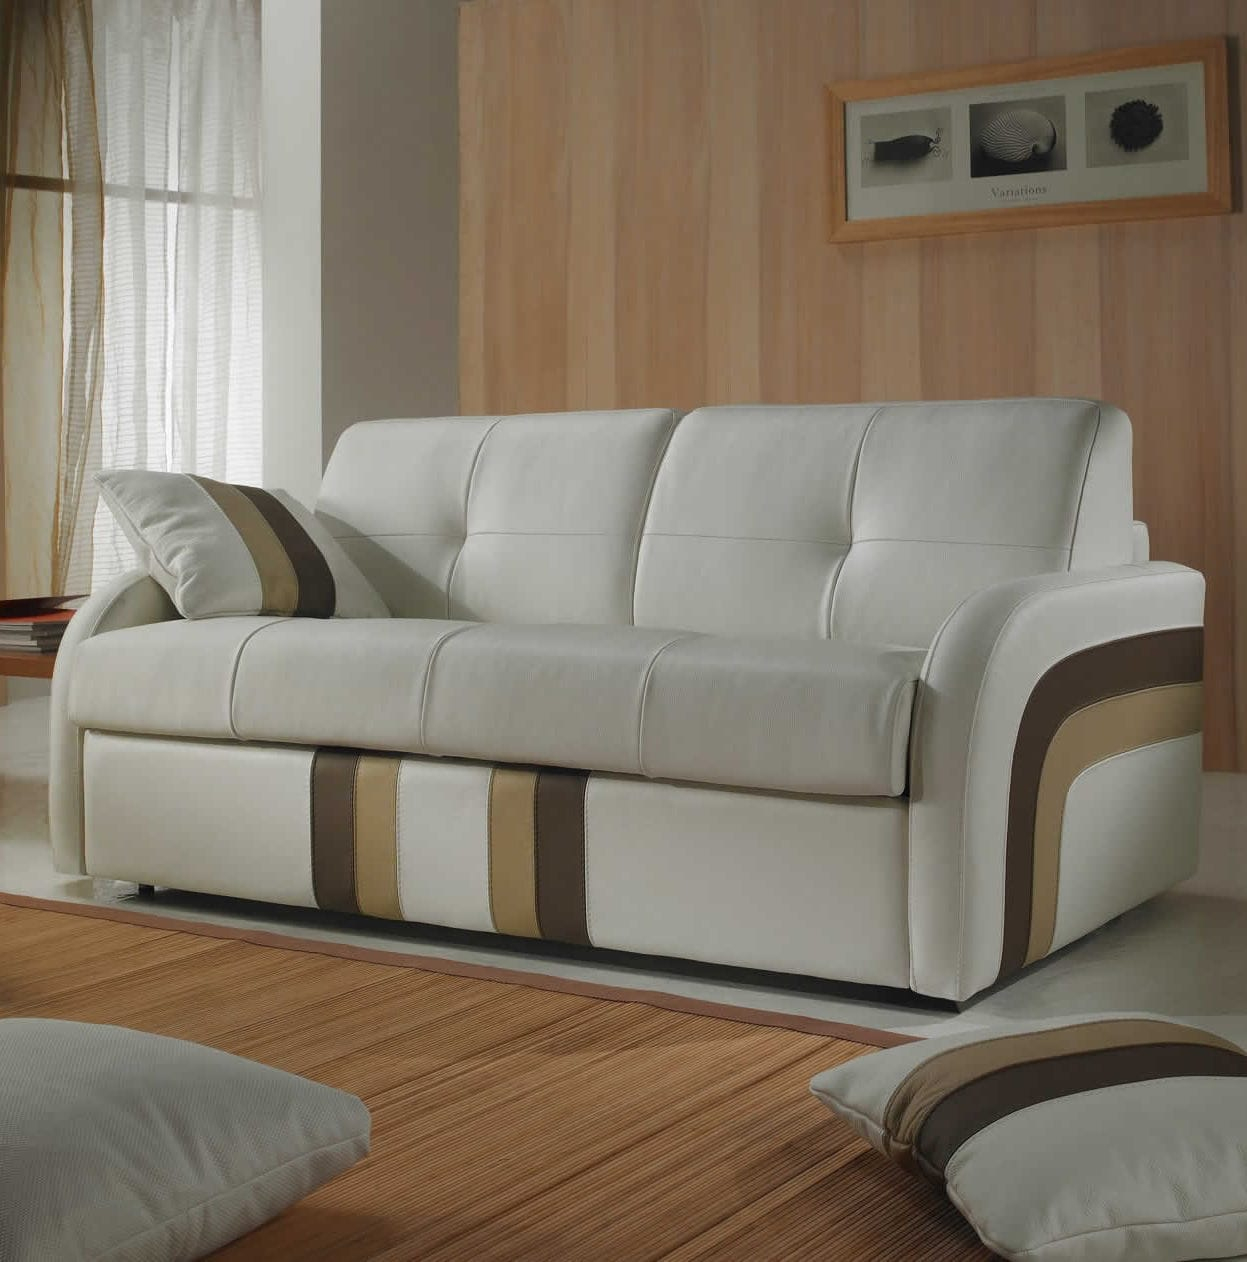 Canapé Lit - Linea - Very Sofa - Contemporain / En Cuir ... avec Canape Cuir Contemporain